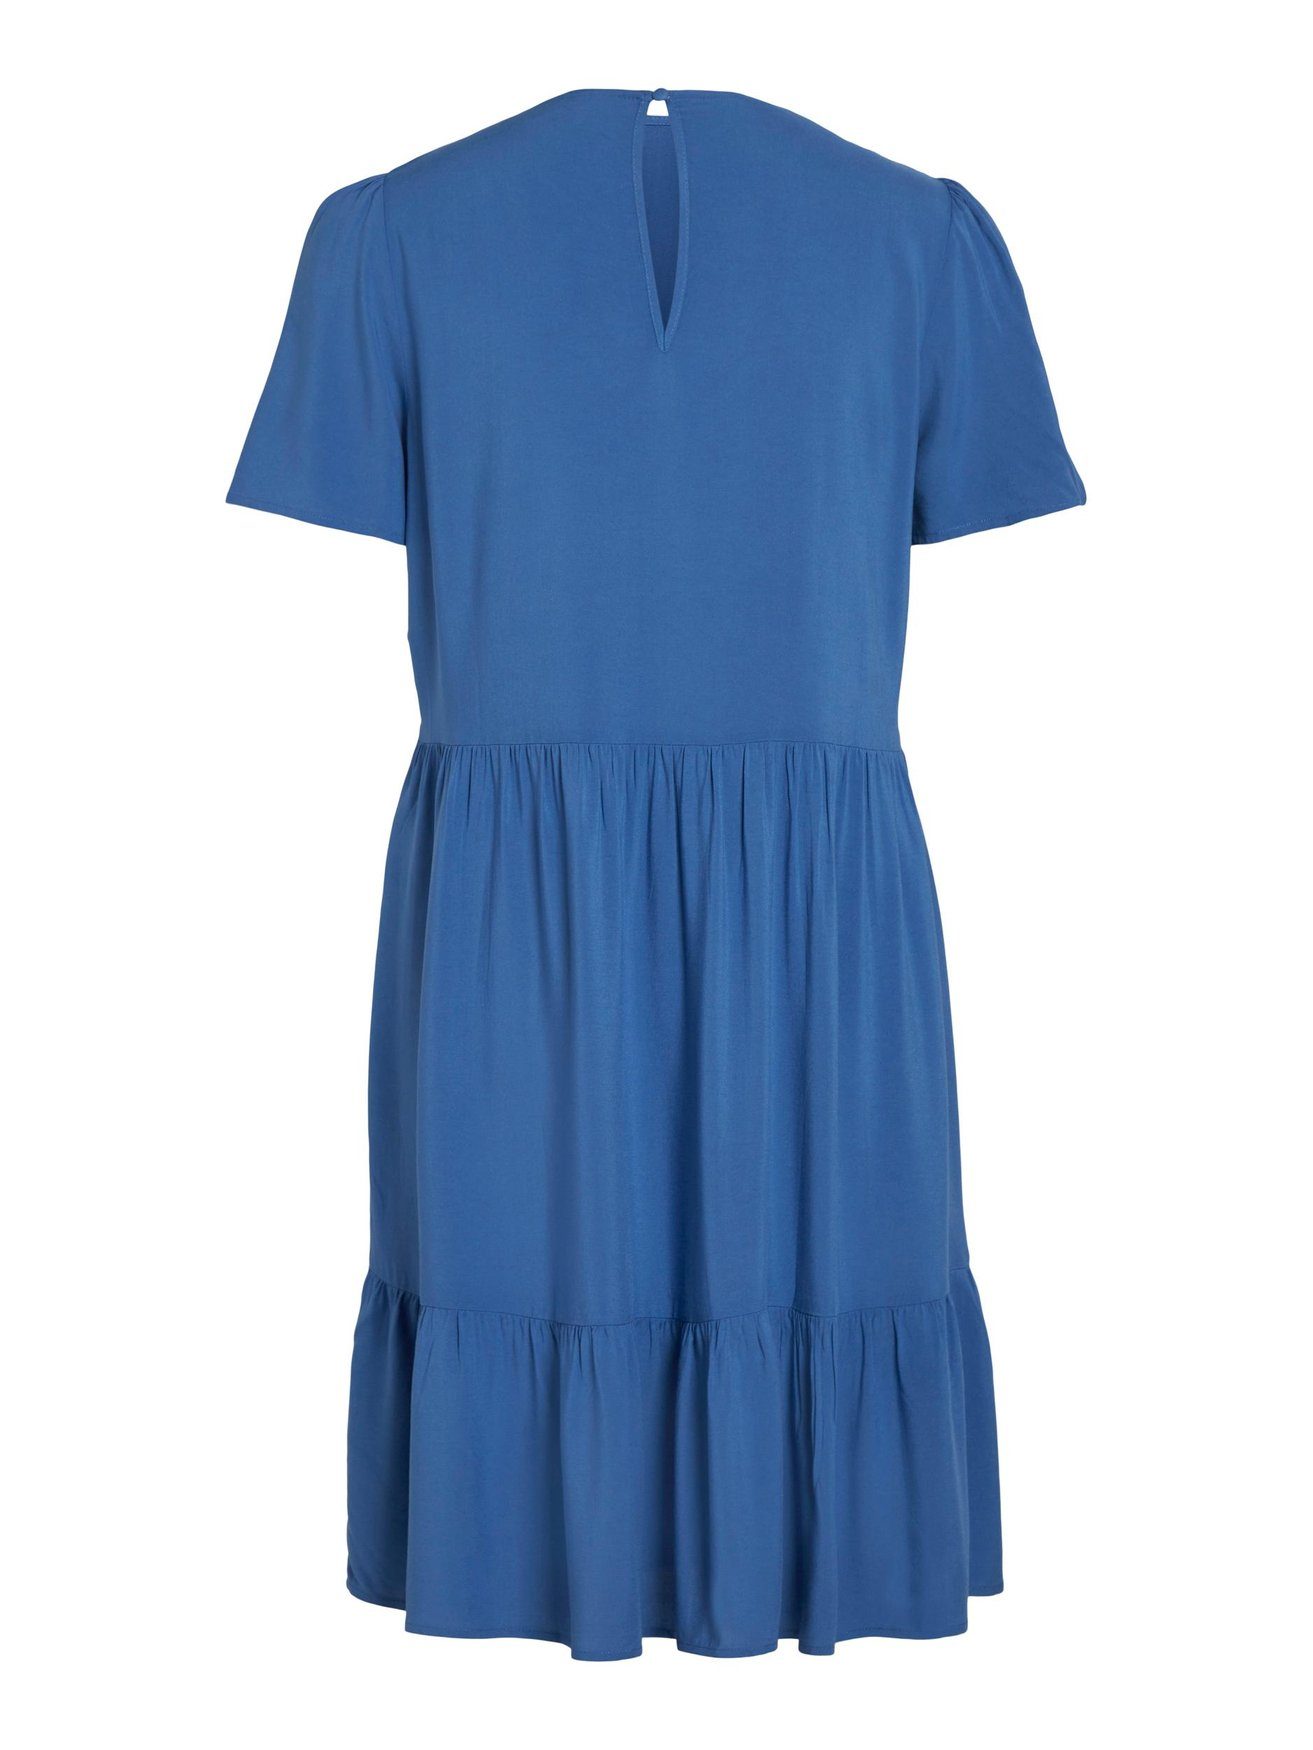 Vila Shirtkleid Blusen Kleid 6067 Kurzarm Blau VIPAYA Dress (kurz) Knielanges in